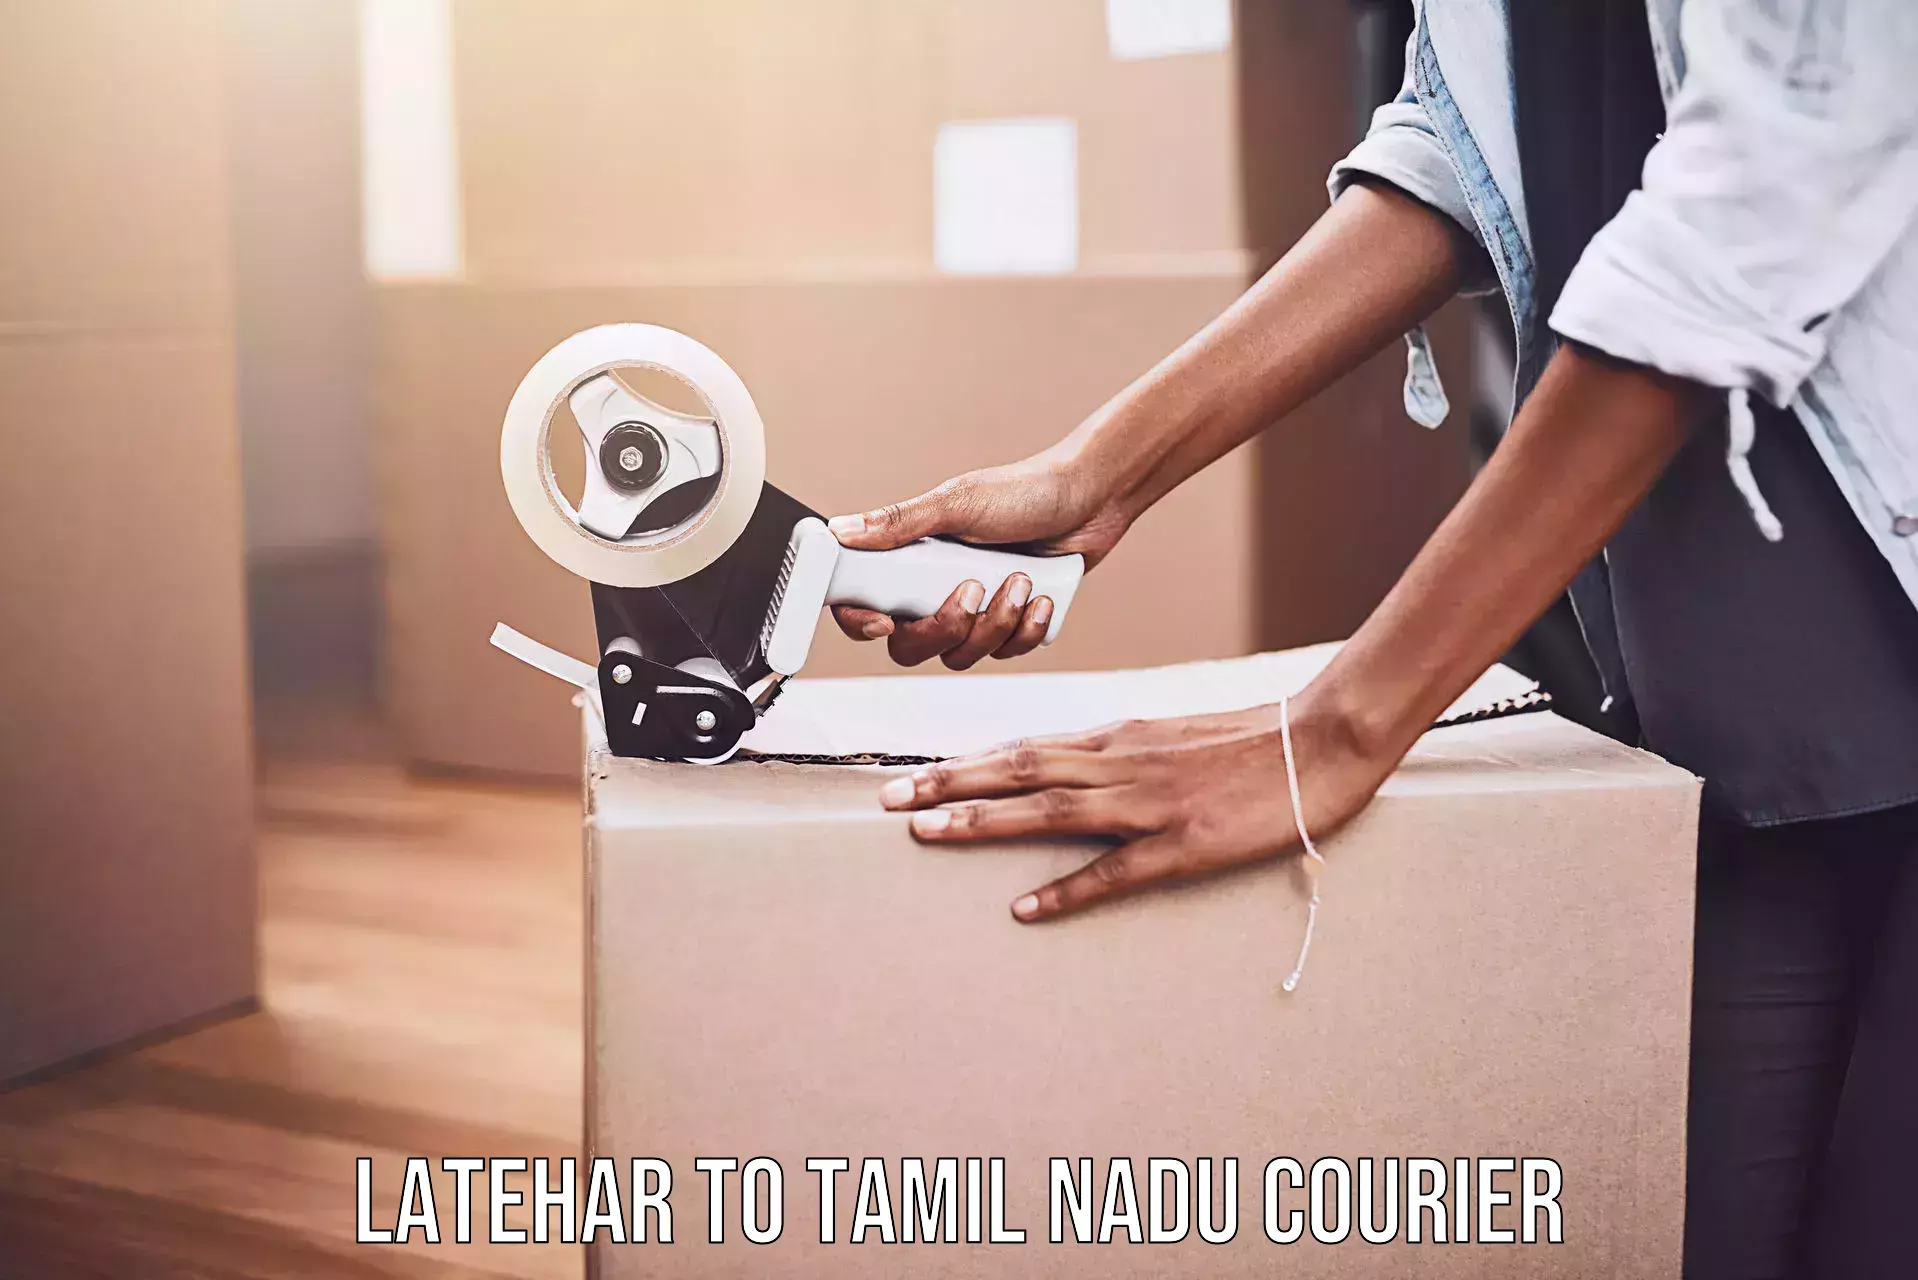 Express package handling Latehar to Tamil Nadu